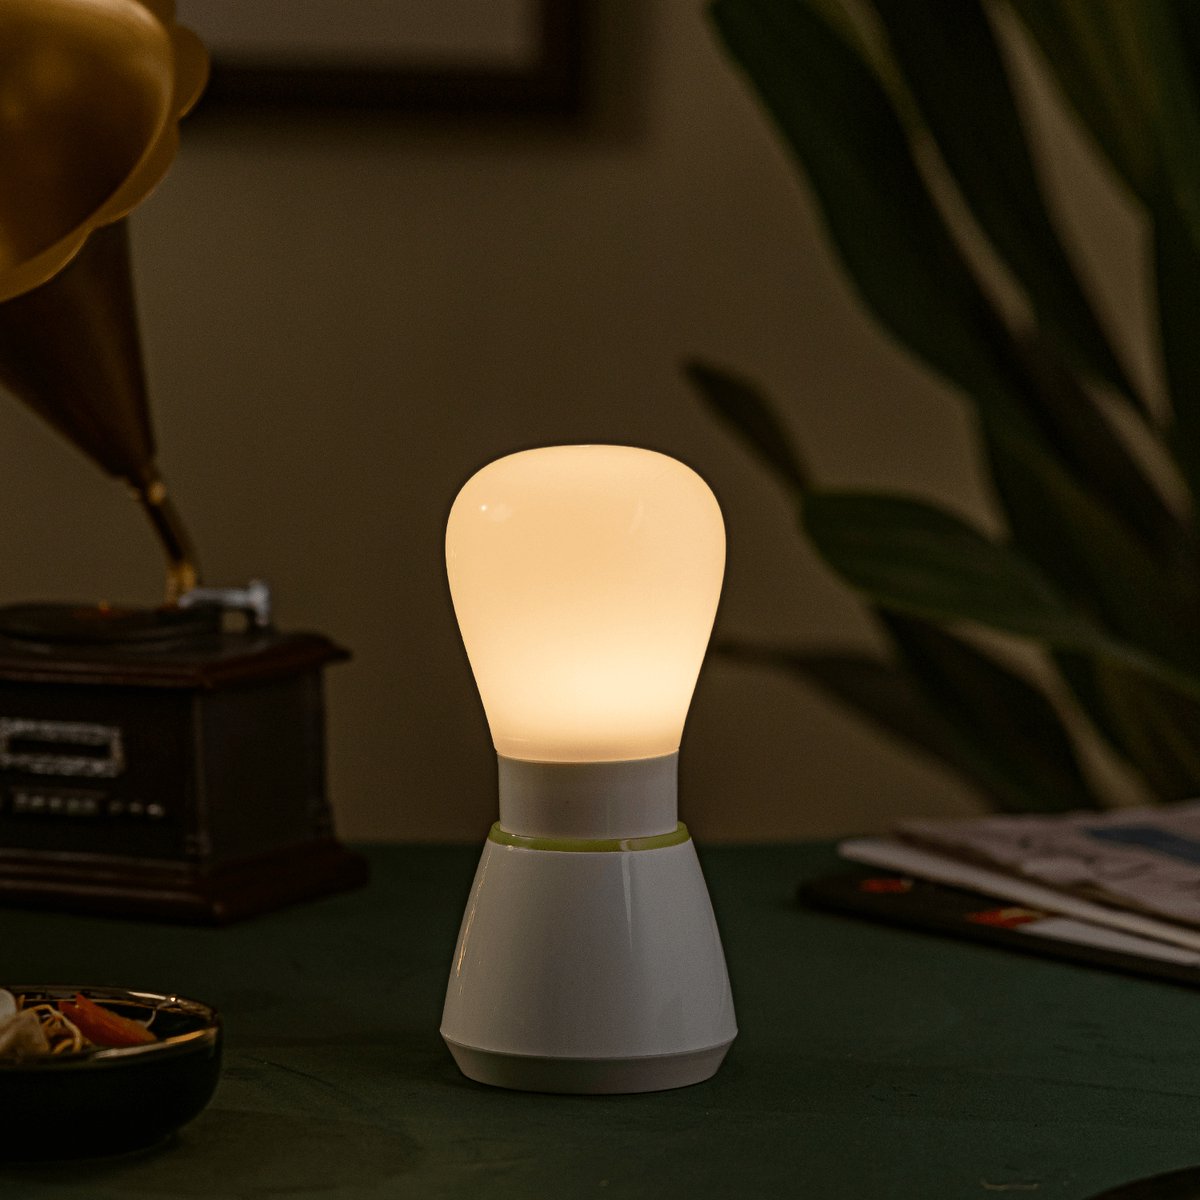 Lampe de chevet blanc chaud rechargeable, 3000K ~35 Lumens 0.5 Watt, Câble USB